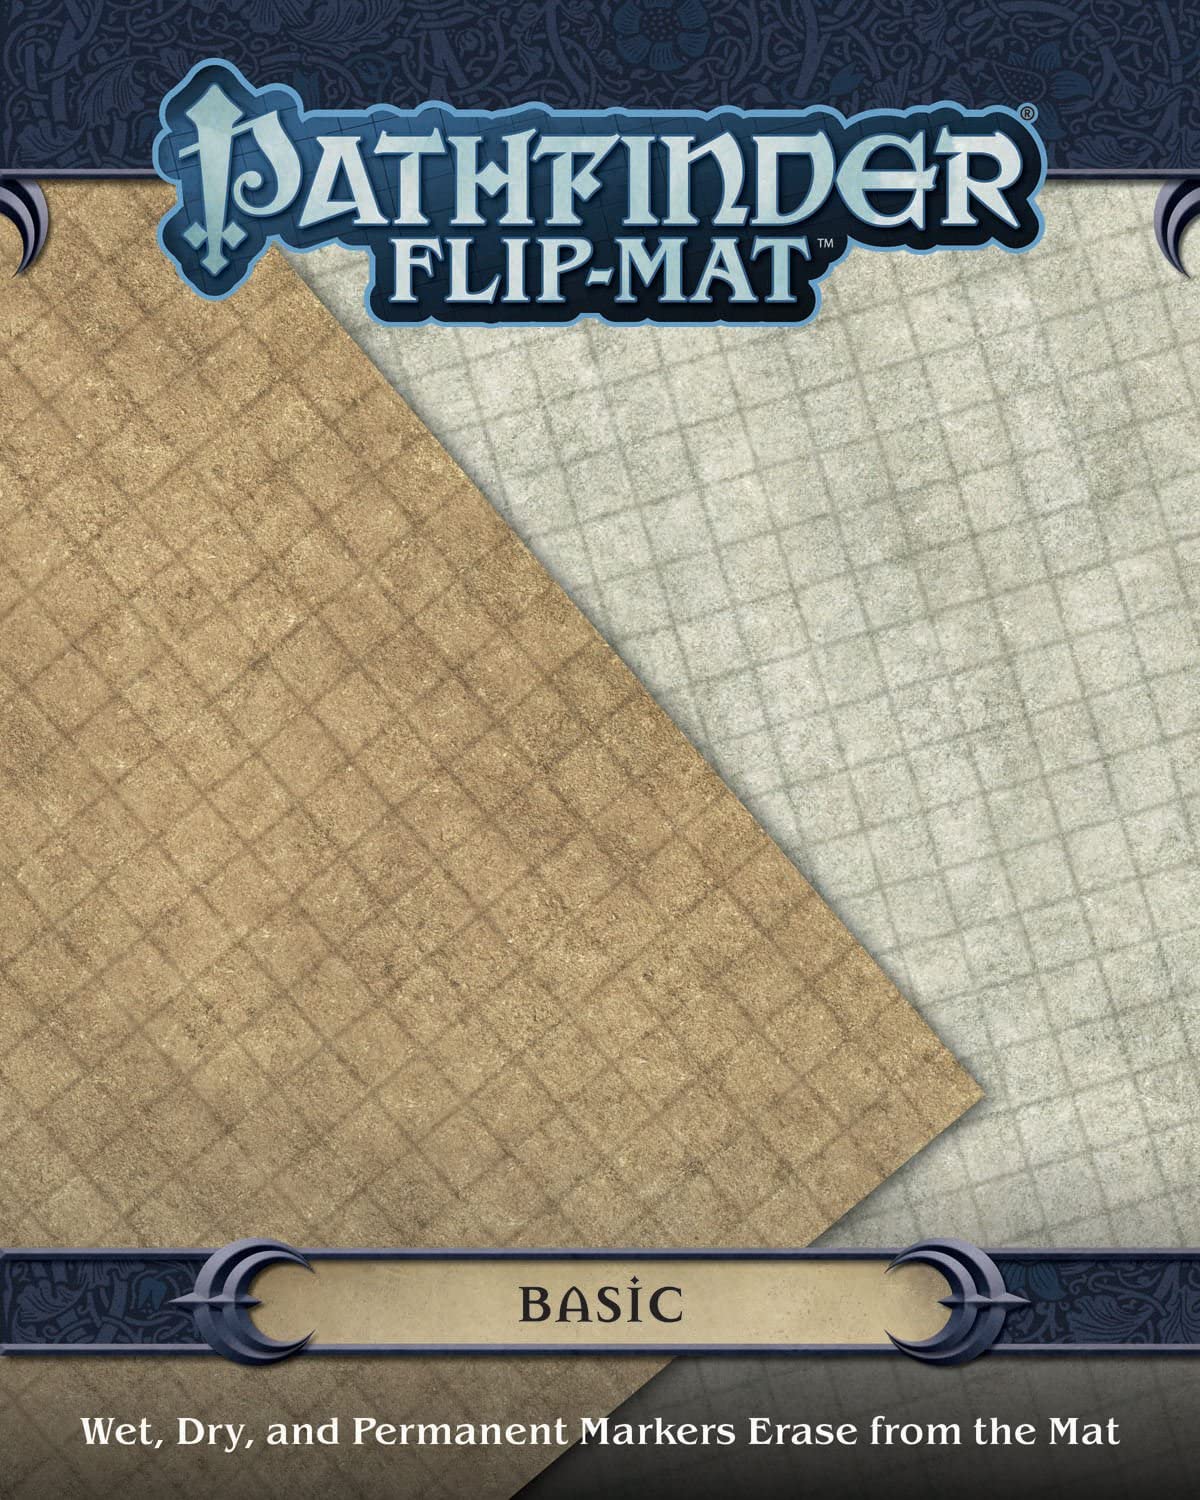 Pathfinder Flip-mat Basic